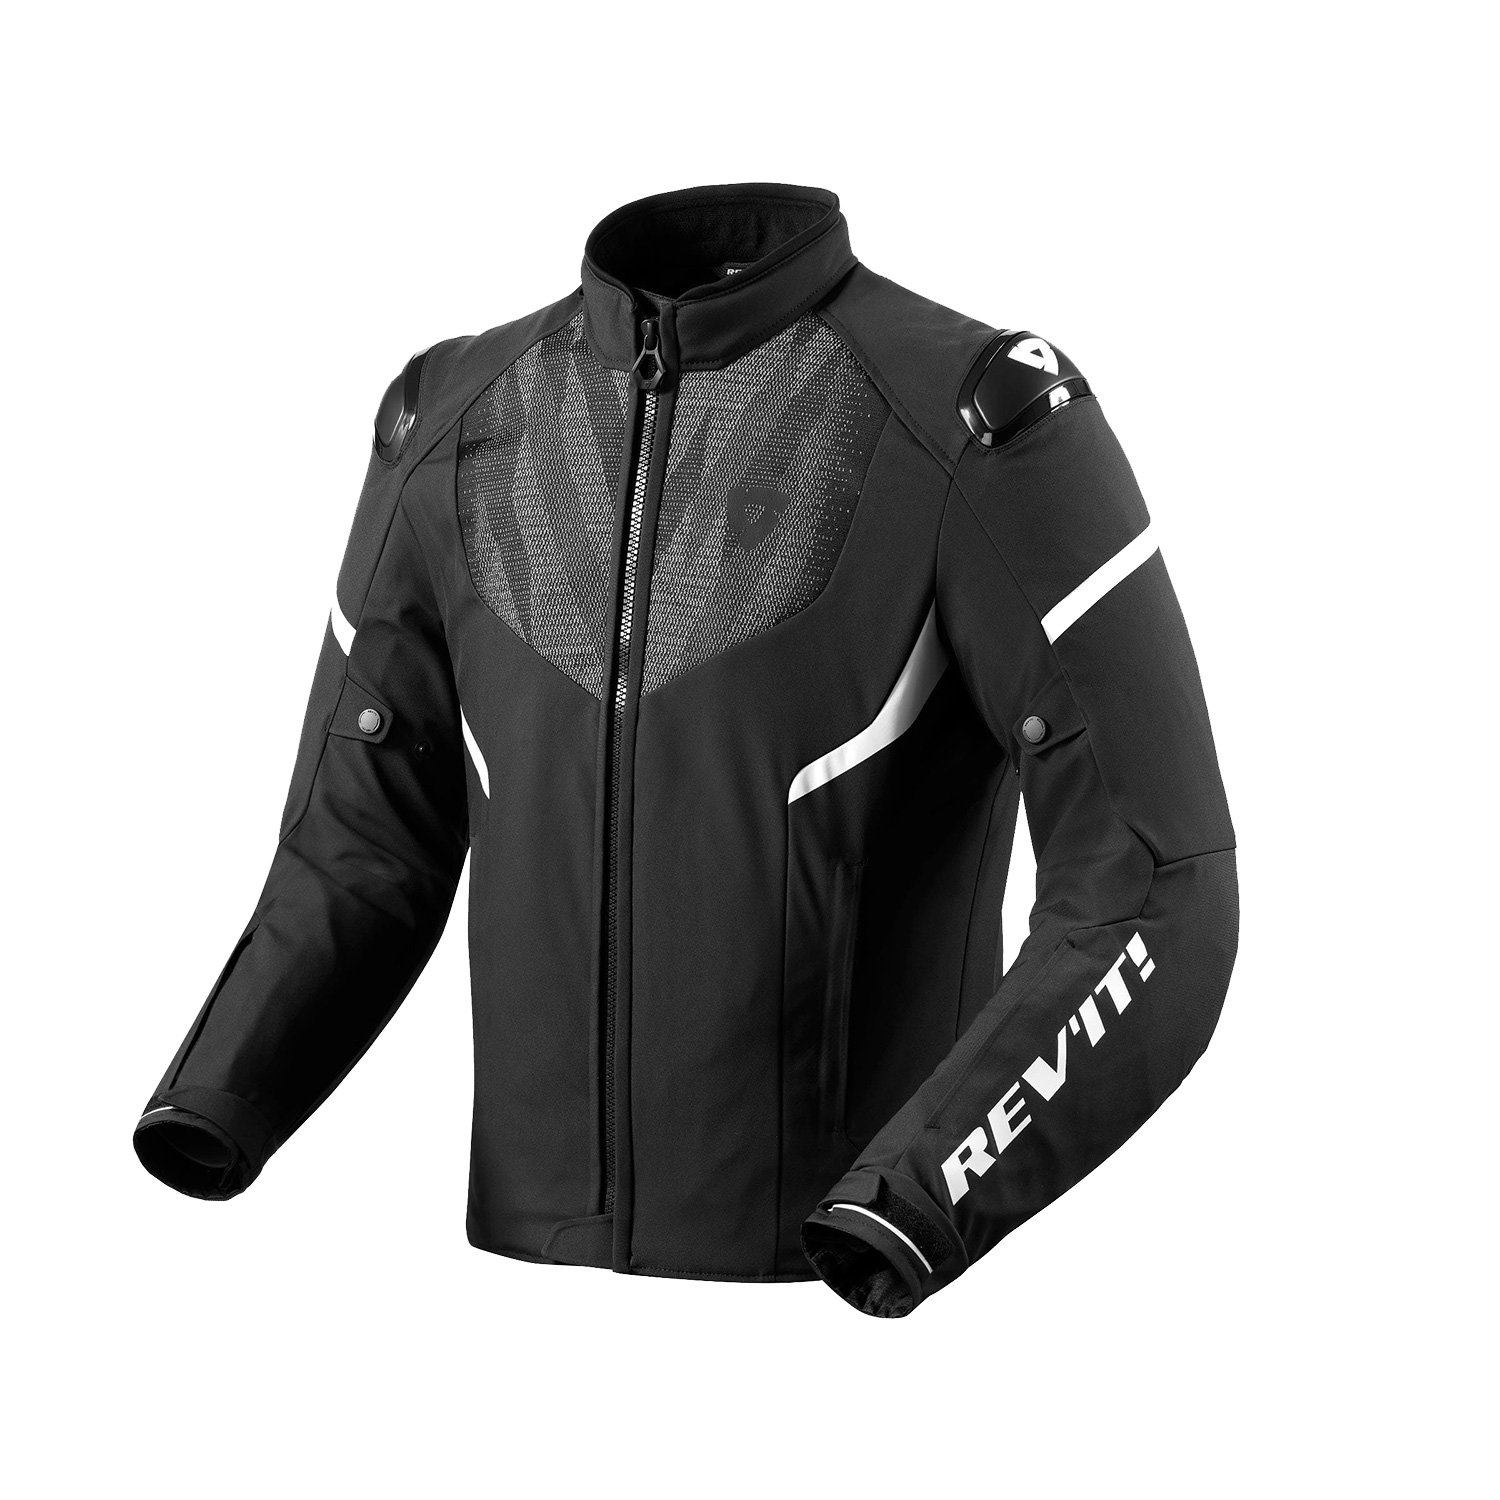 Image of REV'IT! Hyperspeed 2 H2O Jacket Black White Size XL EN